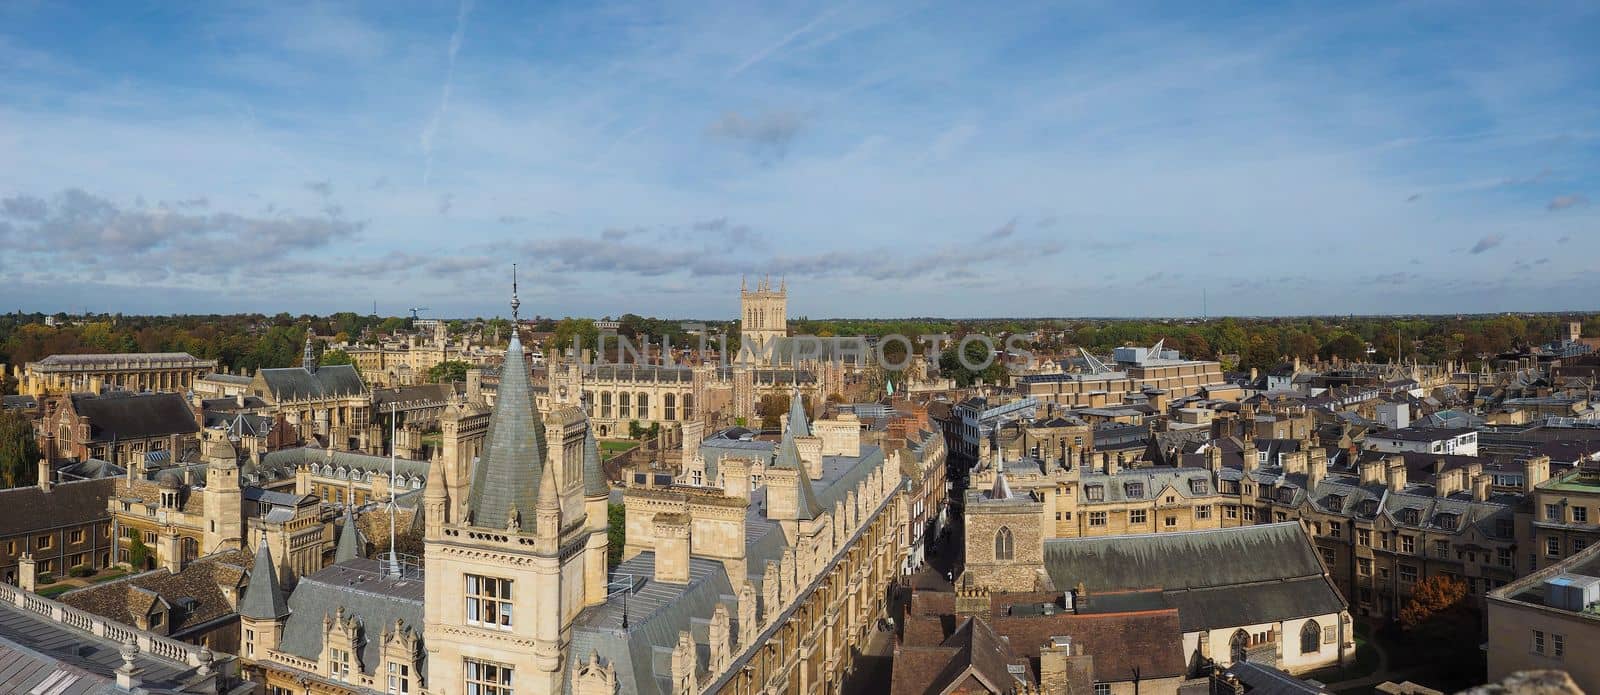 Aerial view of Cambridge by claudiodivizia